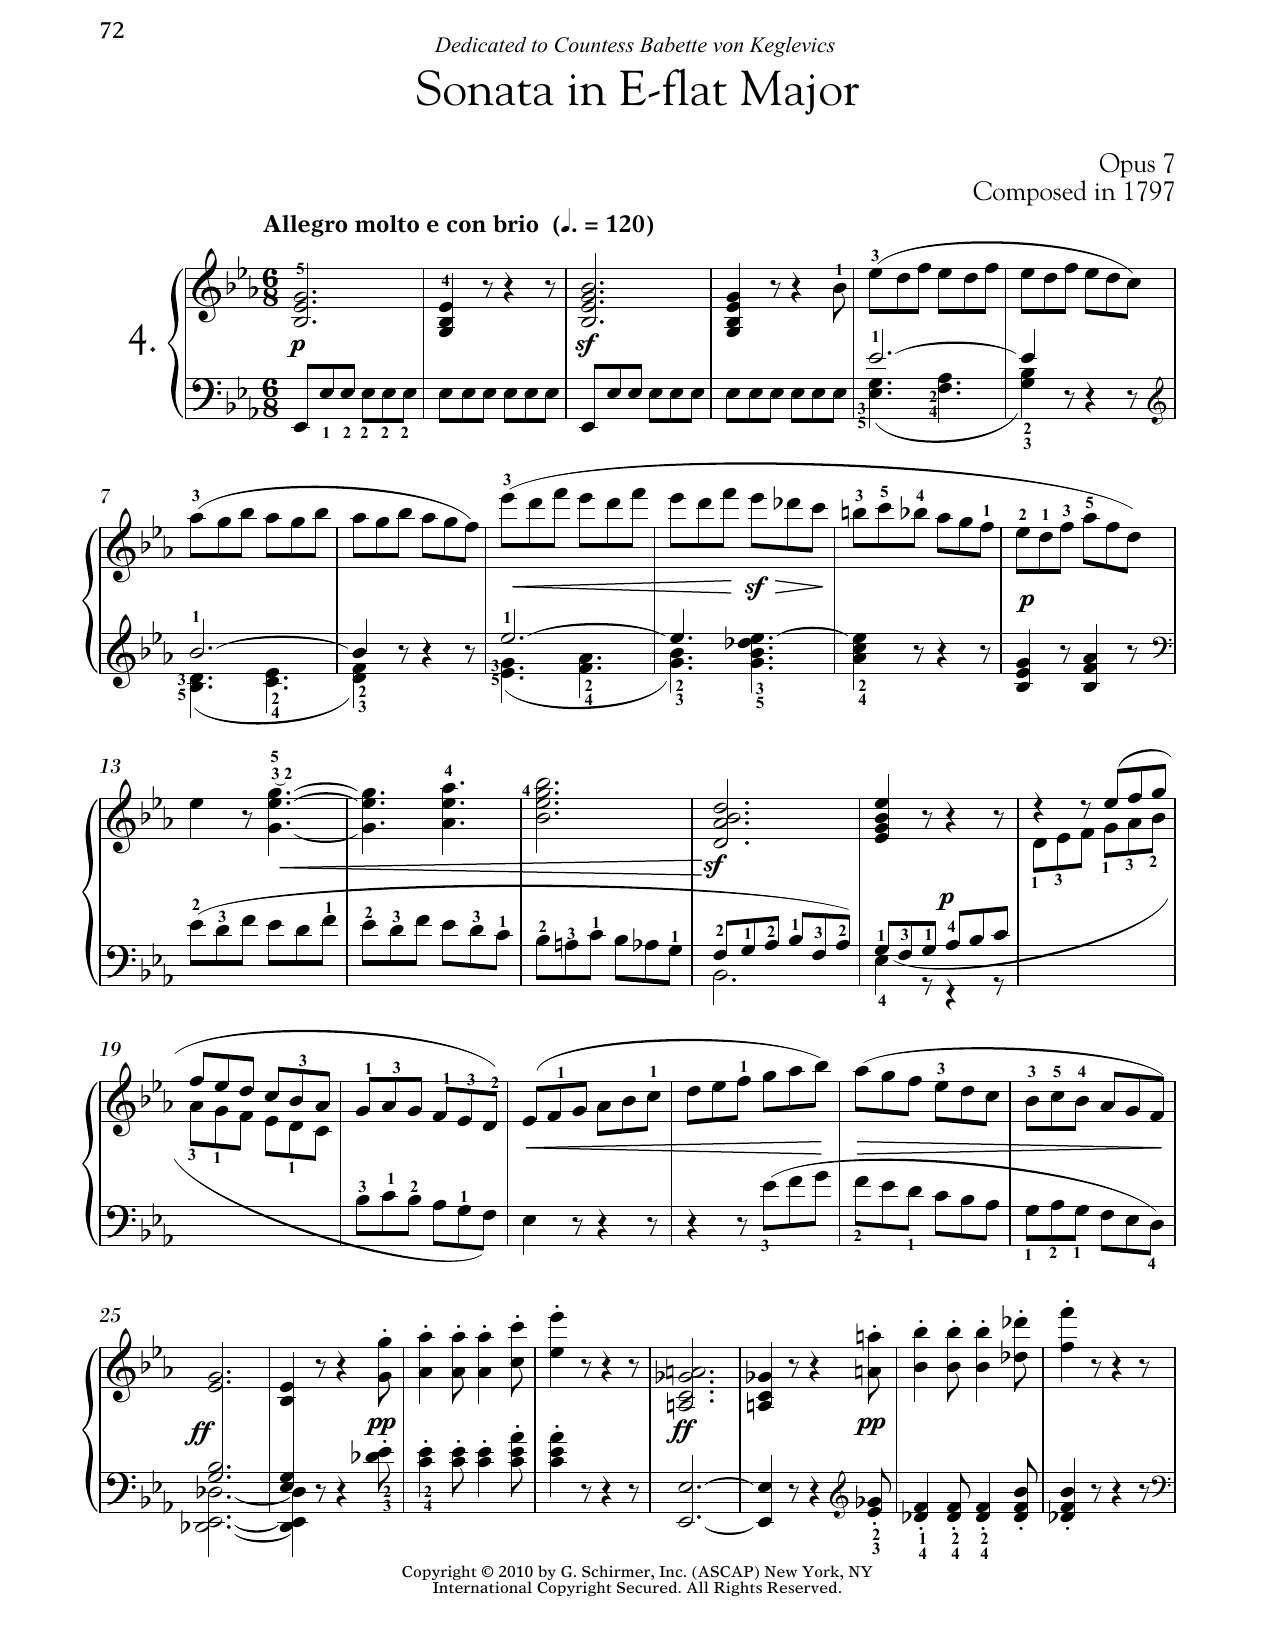 Ludwig van Beethoven Piano Sonata No. 4 In E-flat Major, Op. 7 Sheet Music Notes & Chords for Piano - Download or Print PDF